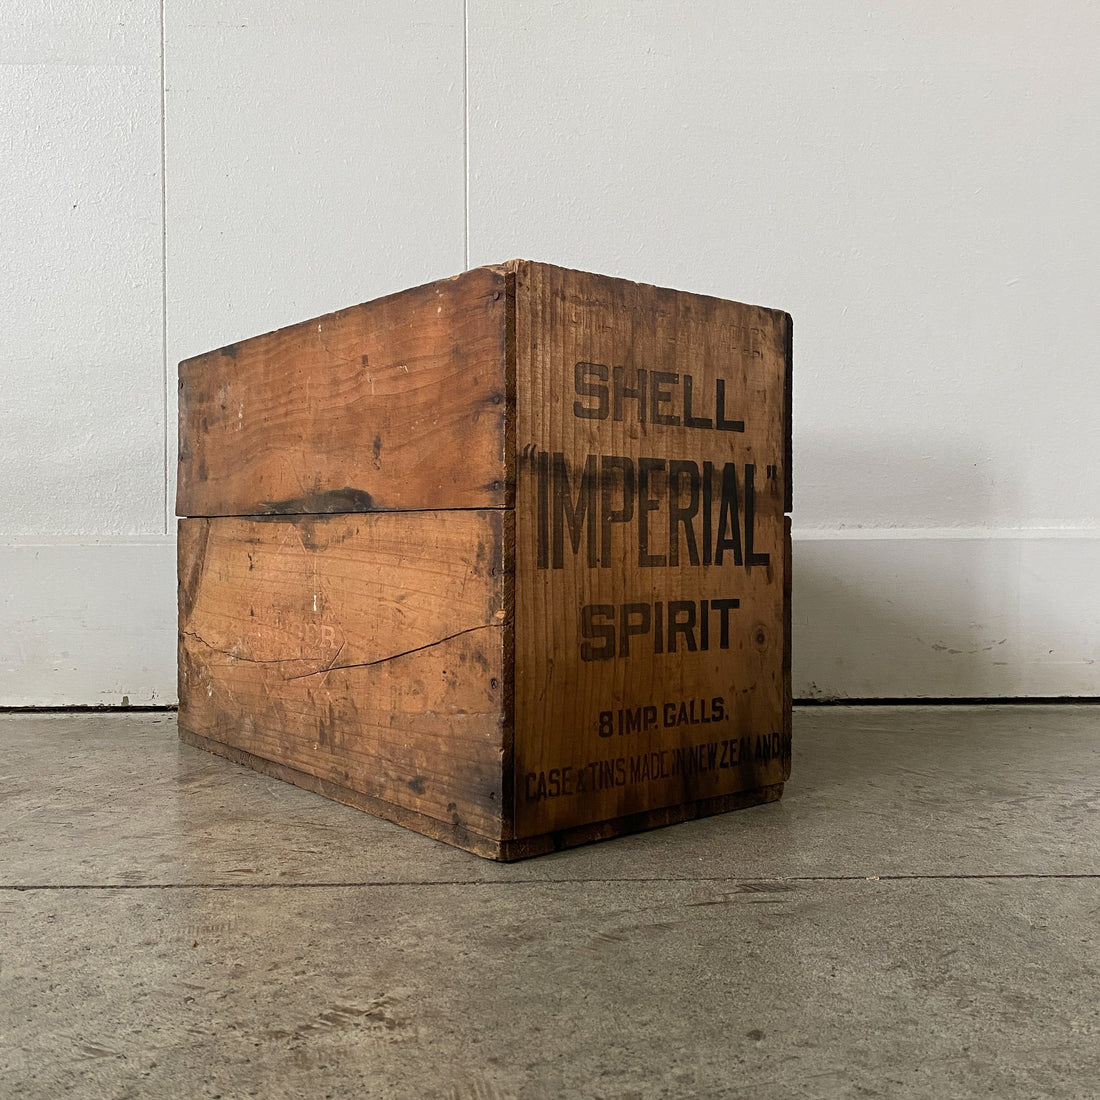 Shell Imperial Spirit Petrol Box 